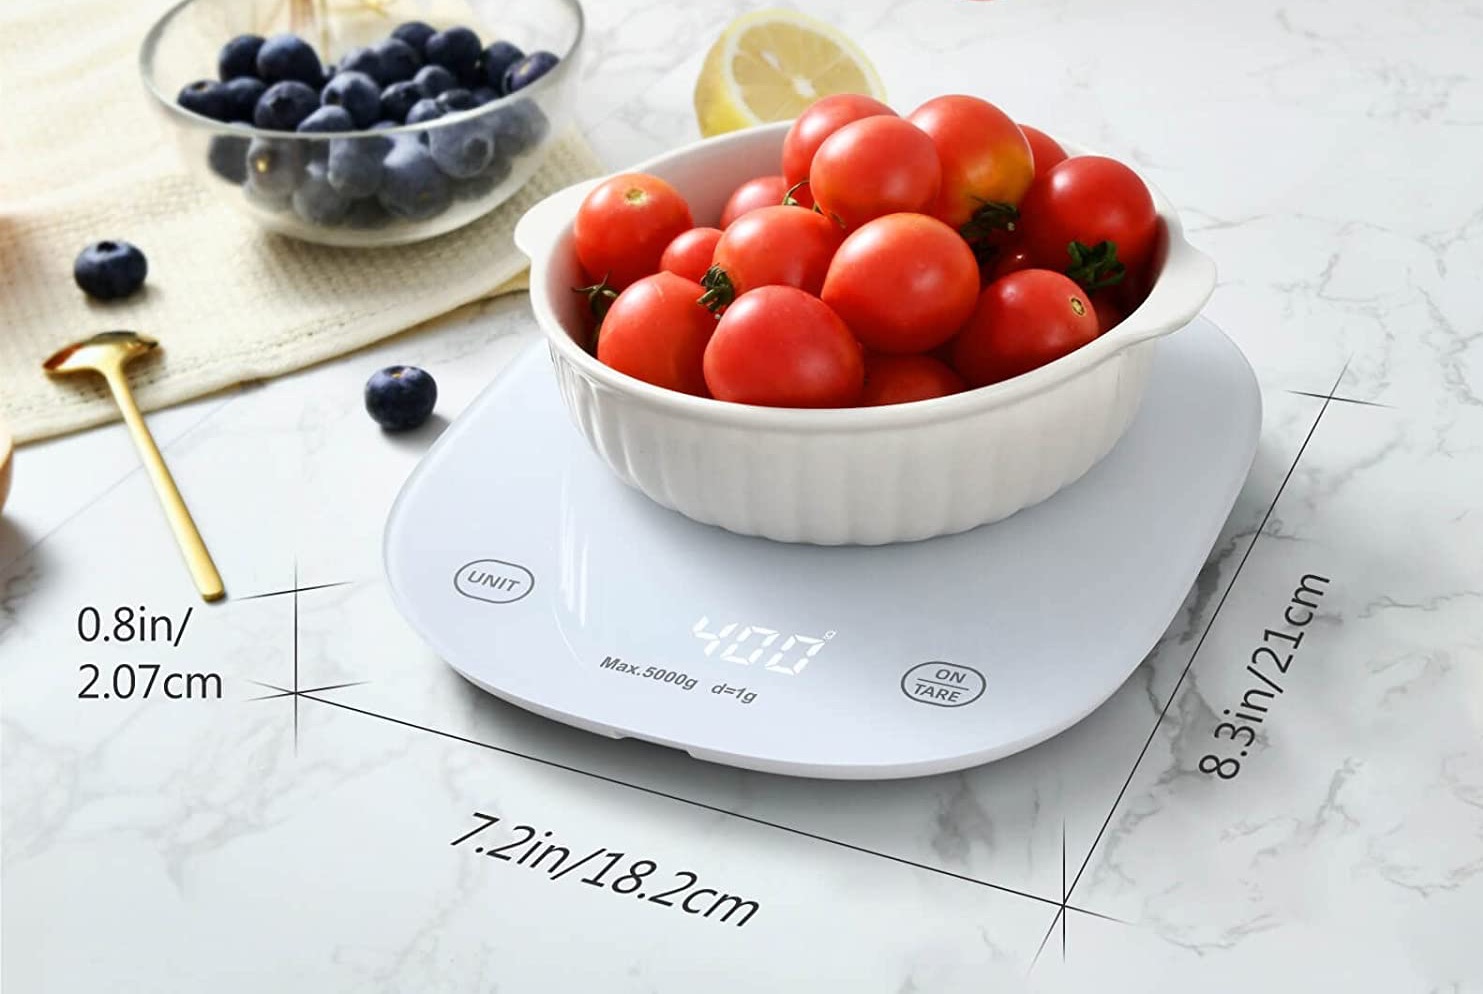 Smart Food Scale with Smartphone App, AGPTEK Digital Kitchen Scale